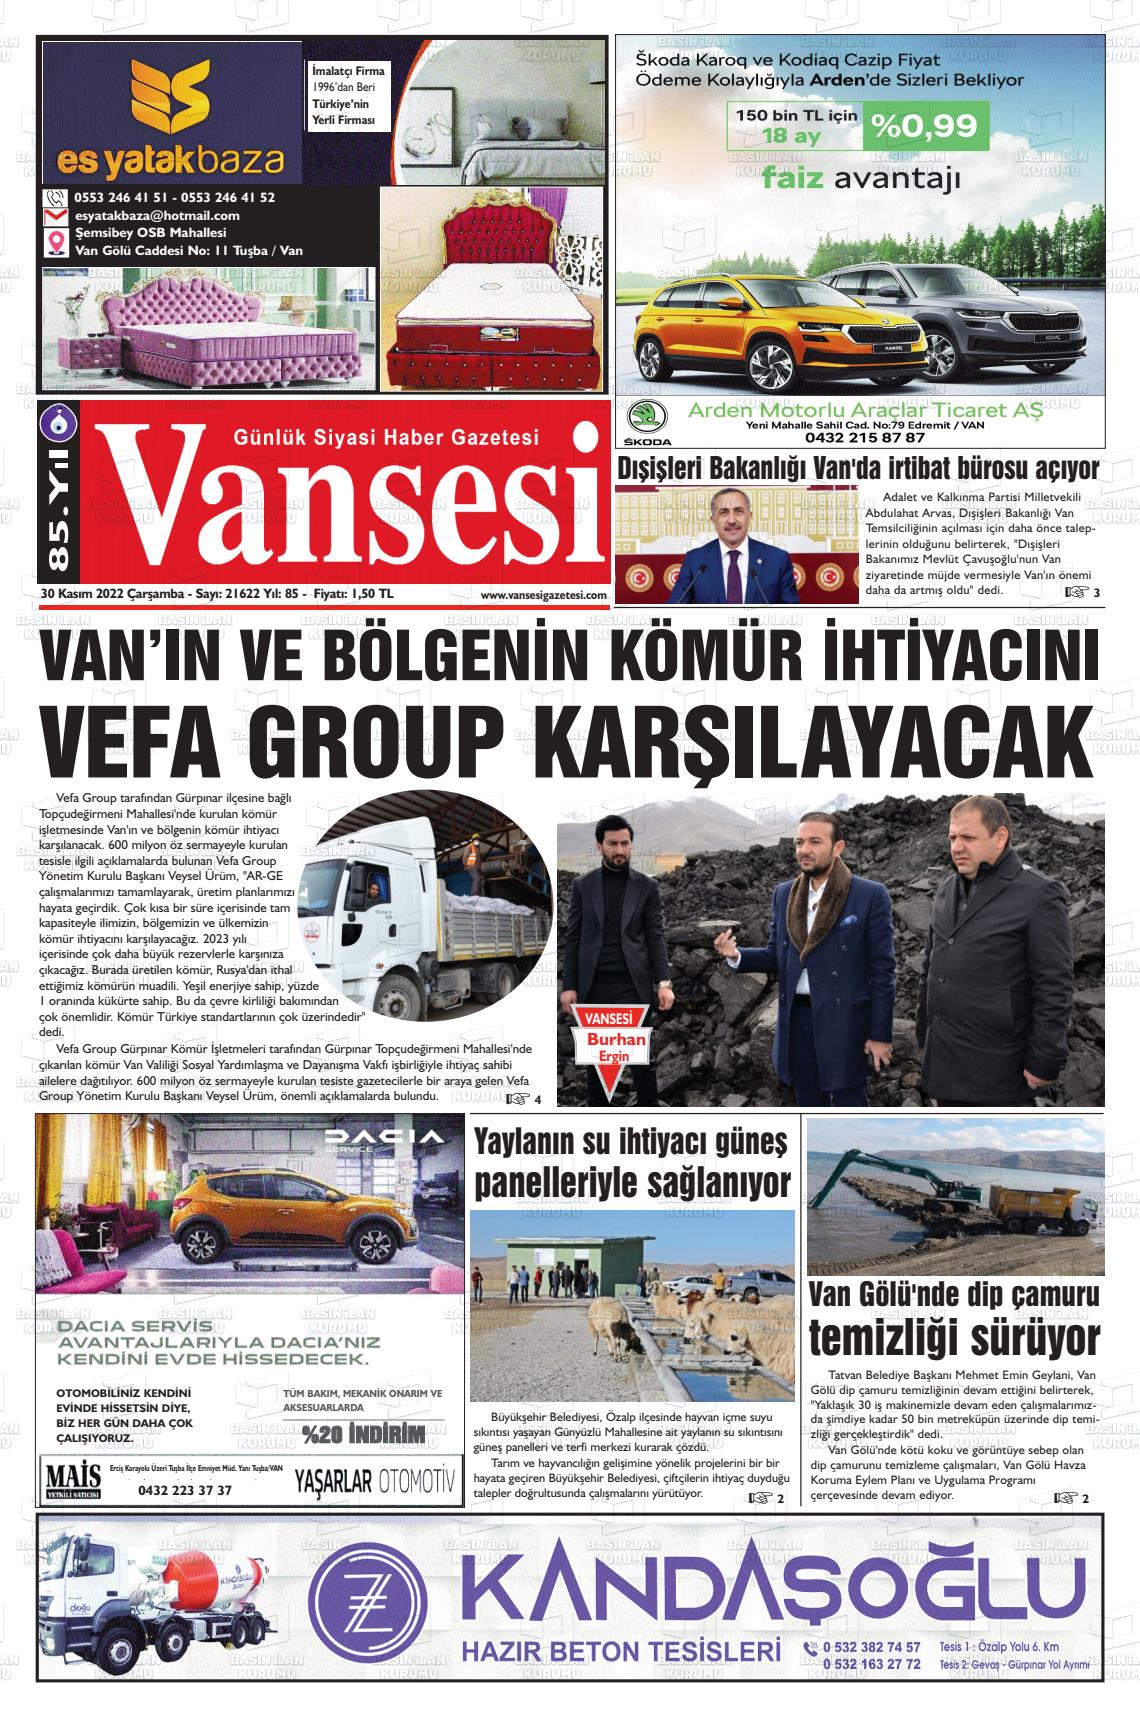 30 Kasım 2022 Vansesi Gazete Manşeti